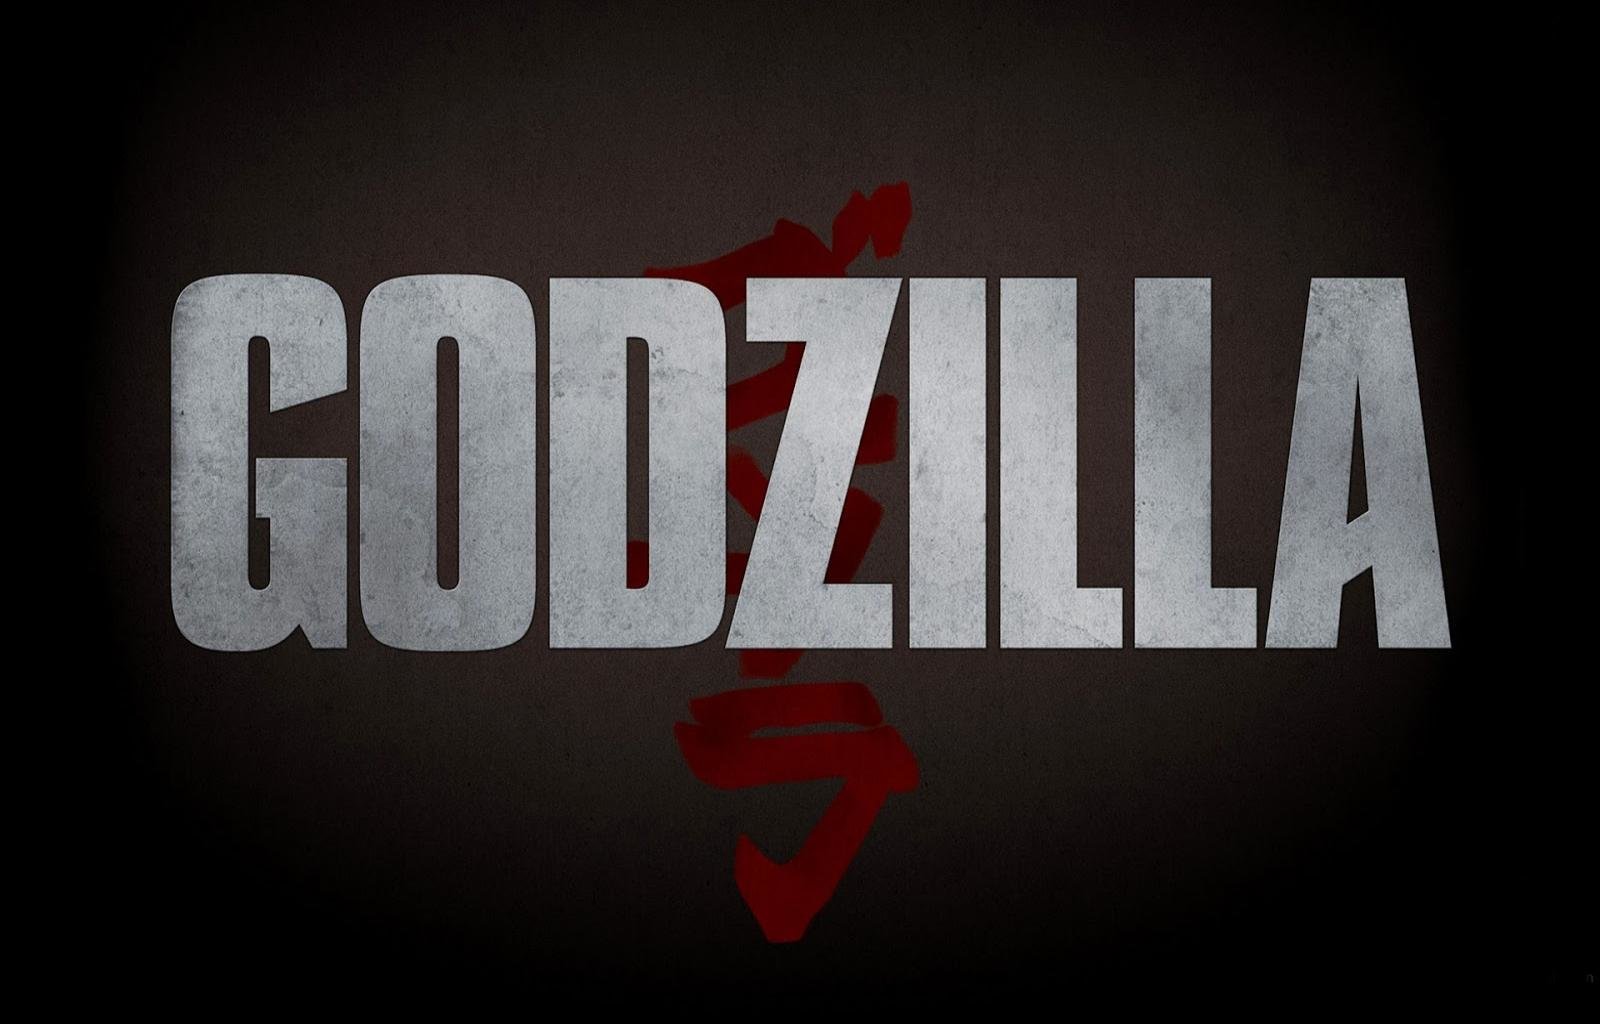 Best Godzilla (2014) wallpaper ID:315639 for High Resolution hd 1600x1024 desktop